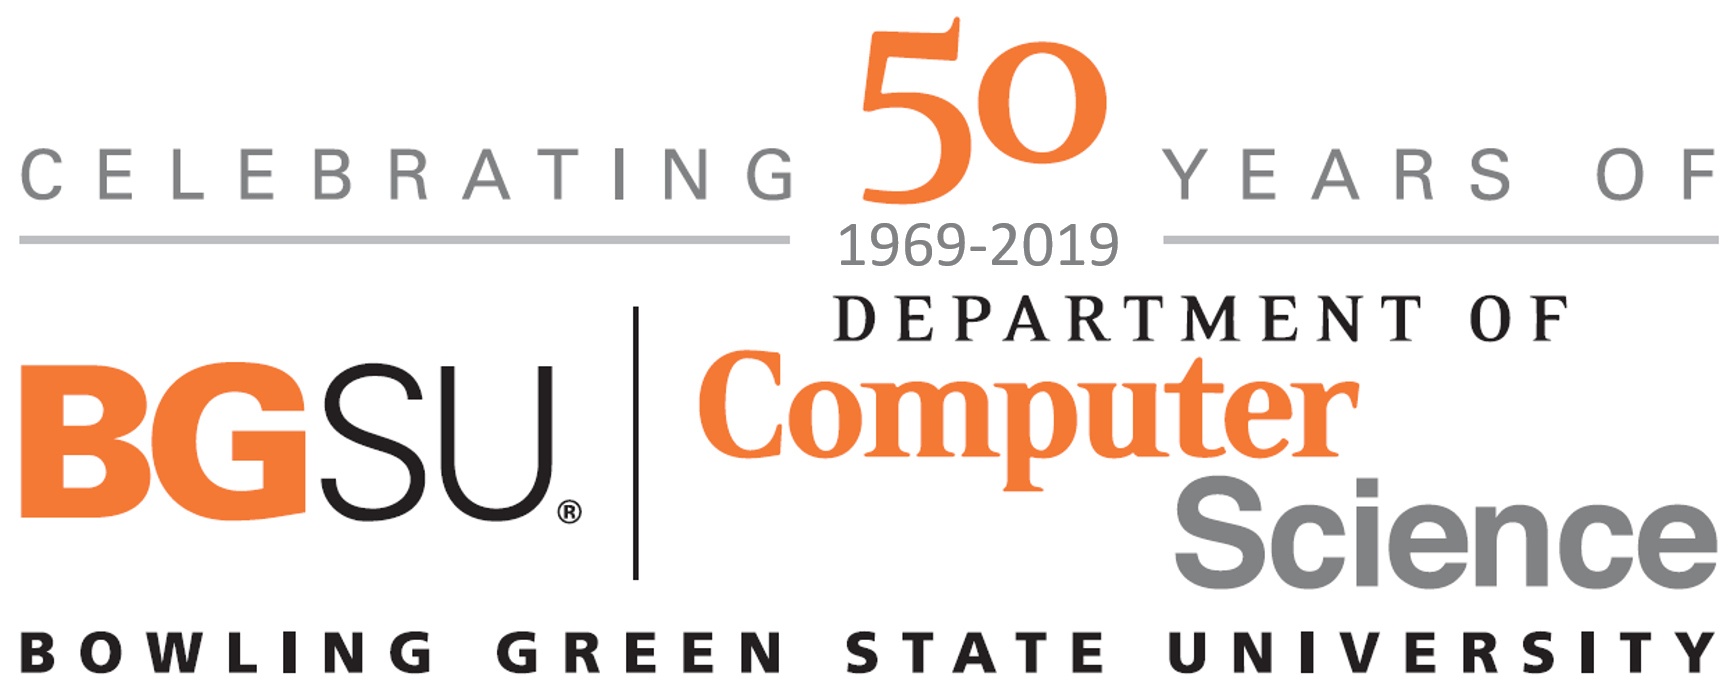 50 year of CS department image